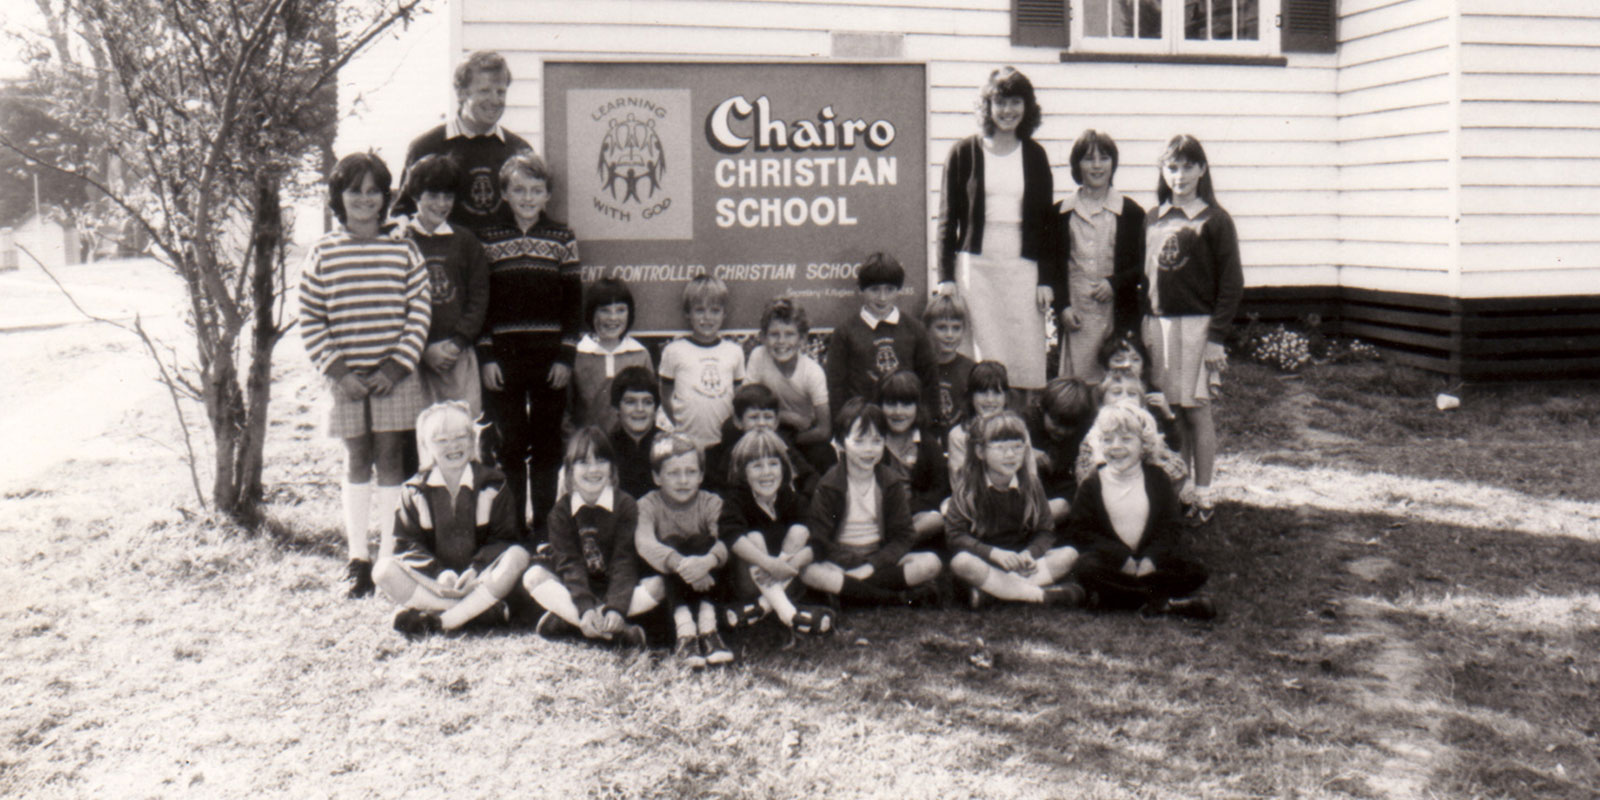 Chairo Christian School History